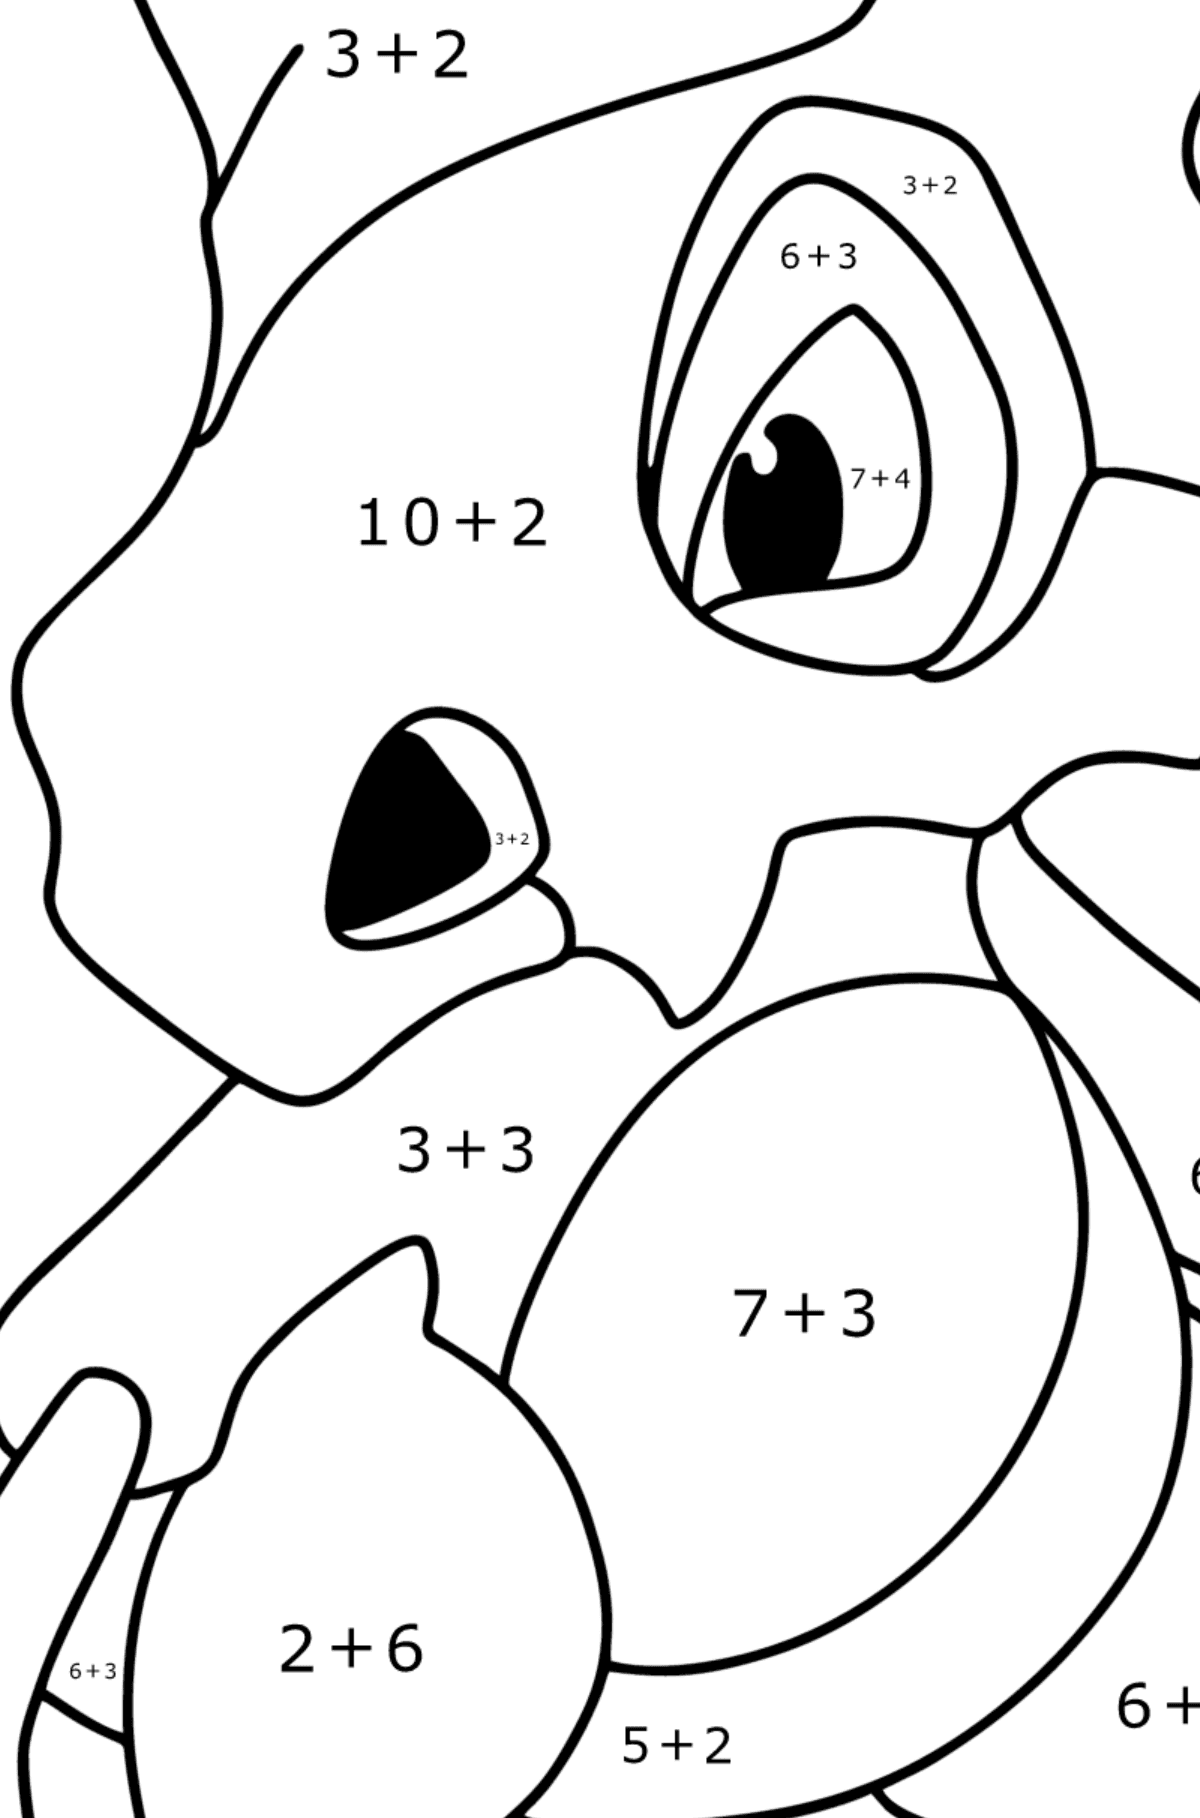 Mewarnai gambar Pokémon Go Cubone - Pewarnaan Matematika: Pertambahan untuk anak-anak